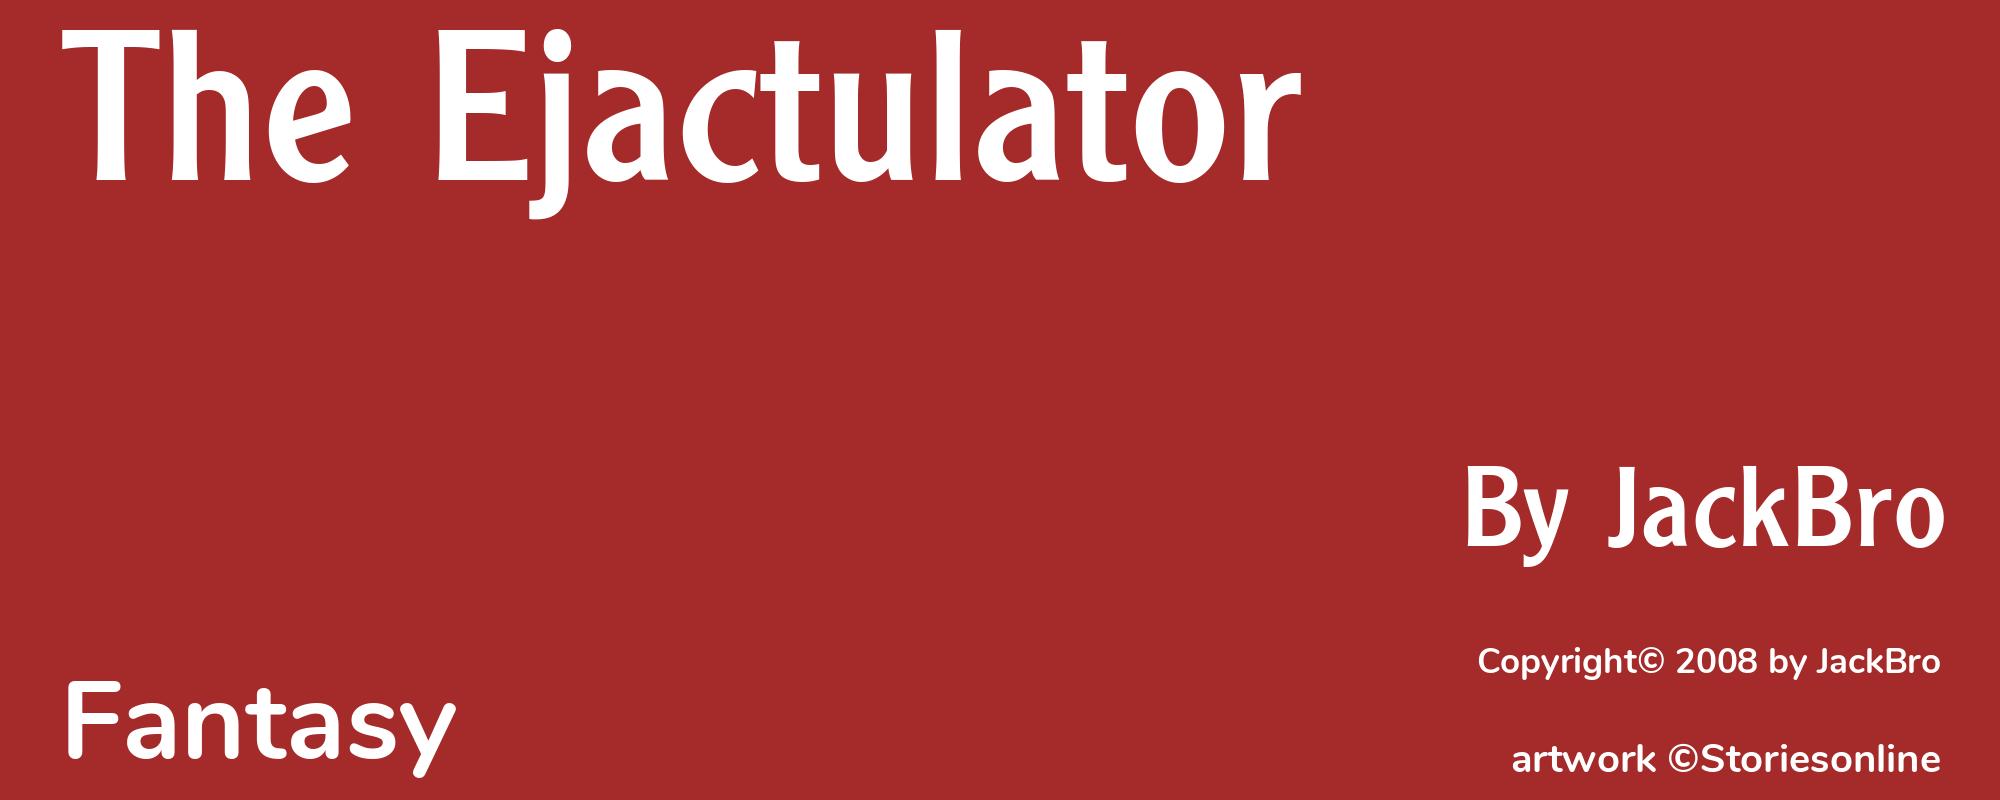 The Ejactulator - Cover